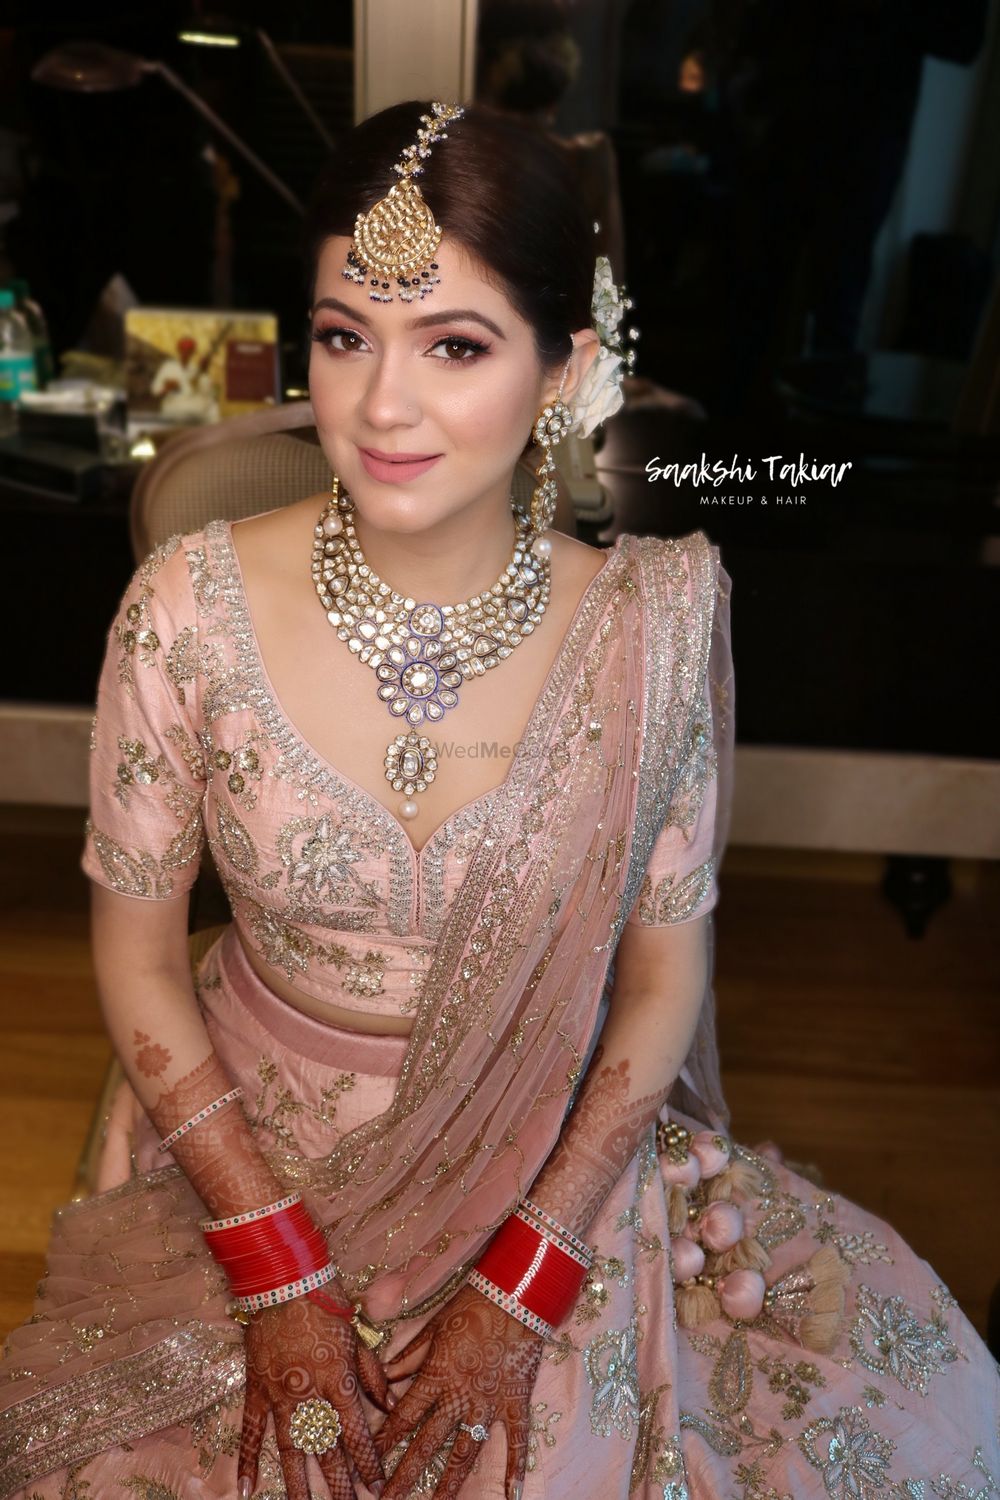 Photo From Kareena's Bridal Makeup - By Makeup by Saakshi Takiar